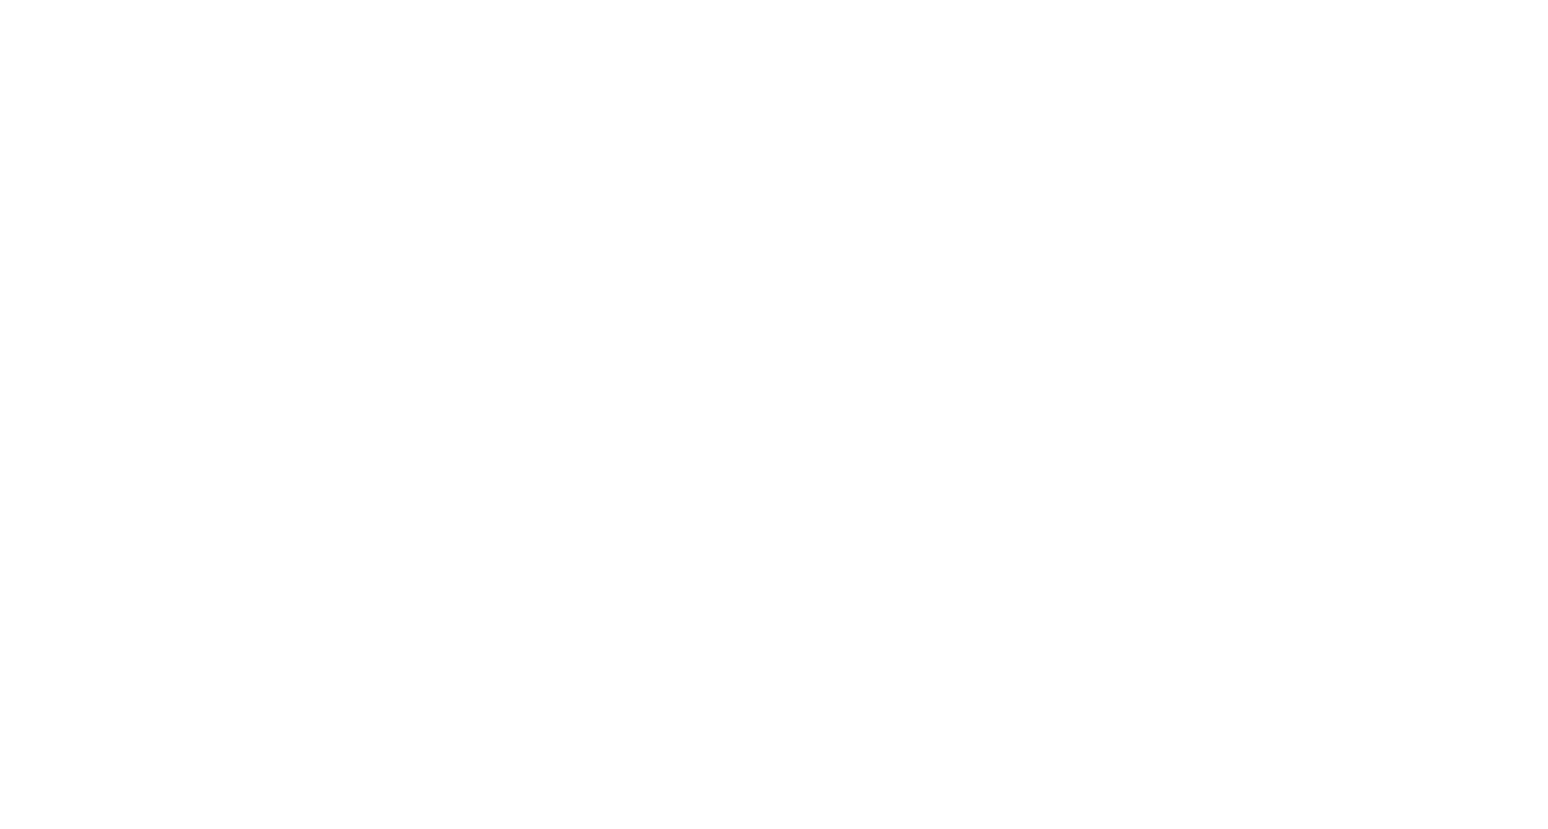 Al Yah Satellite Communications Company logo large for dark backgrounds (transparent PNG)